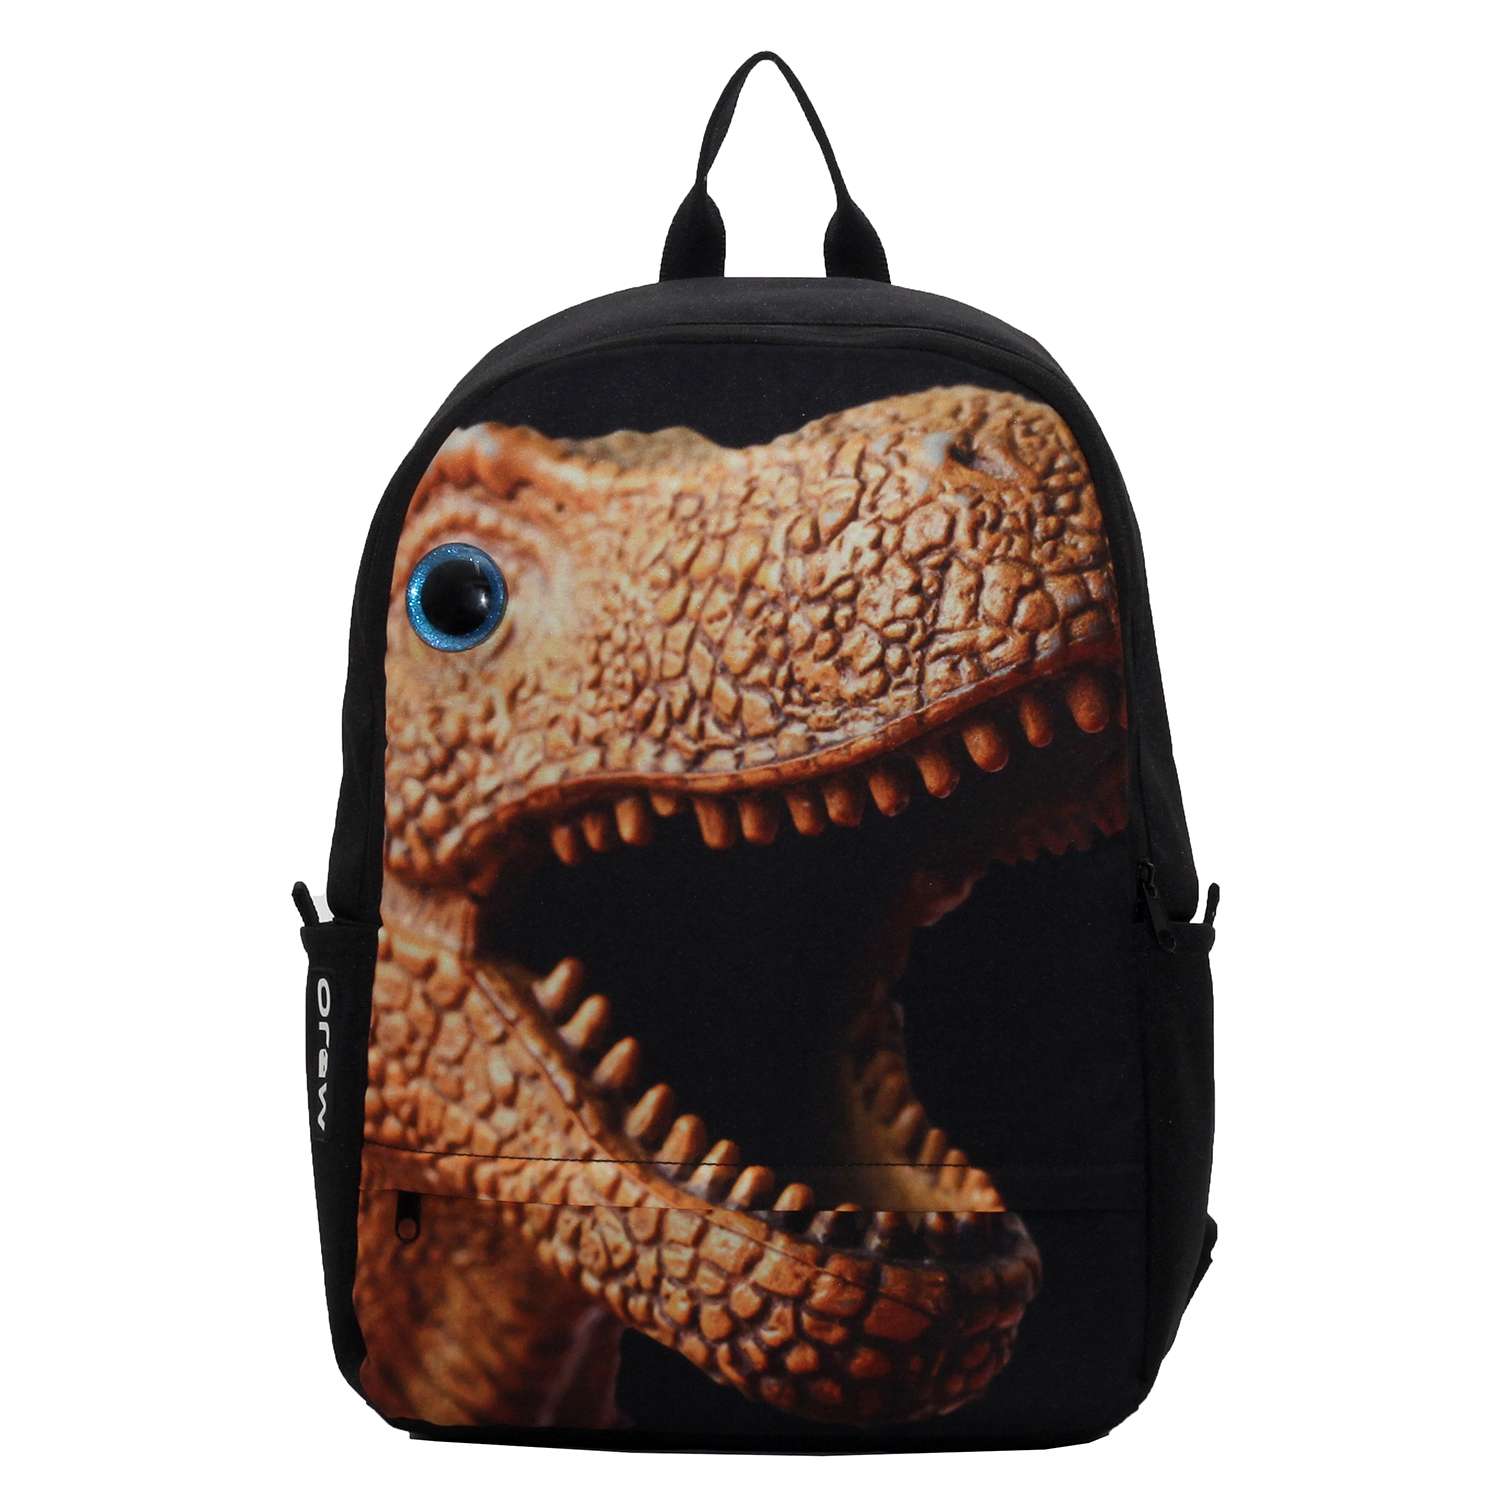 Рюкзак Mojo Pax Dino with 3D eye цвет черный - фото 1